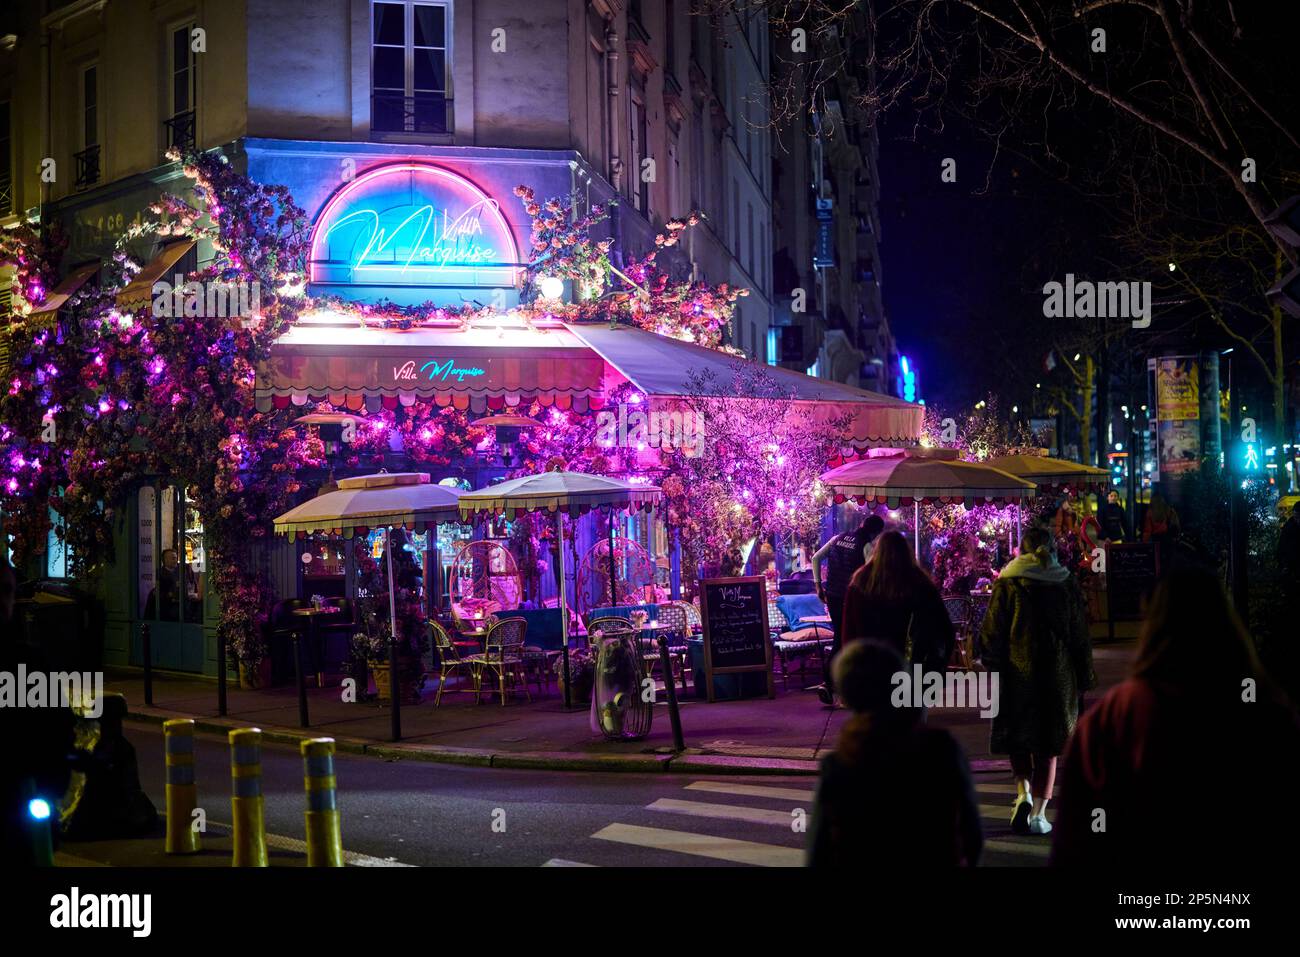 Paris landmark, Villa Marquise - Brasserie at night Stock Photo - Alamy